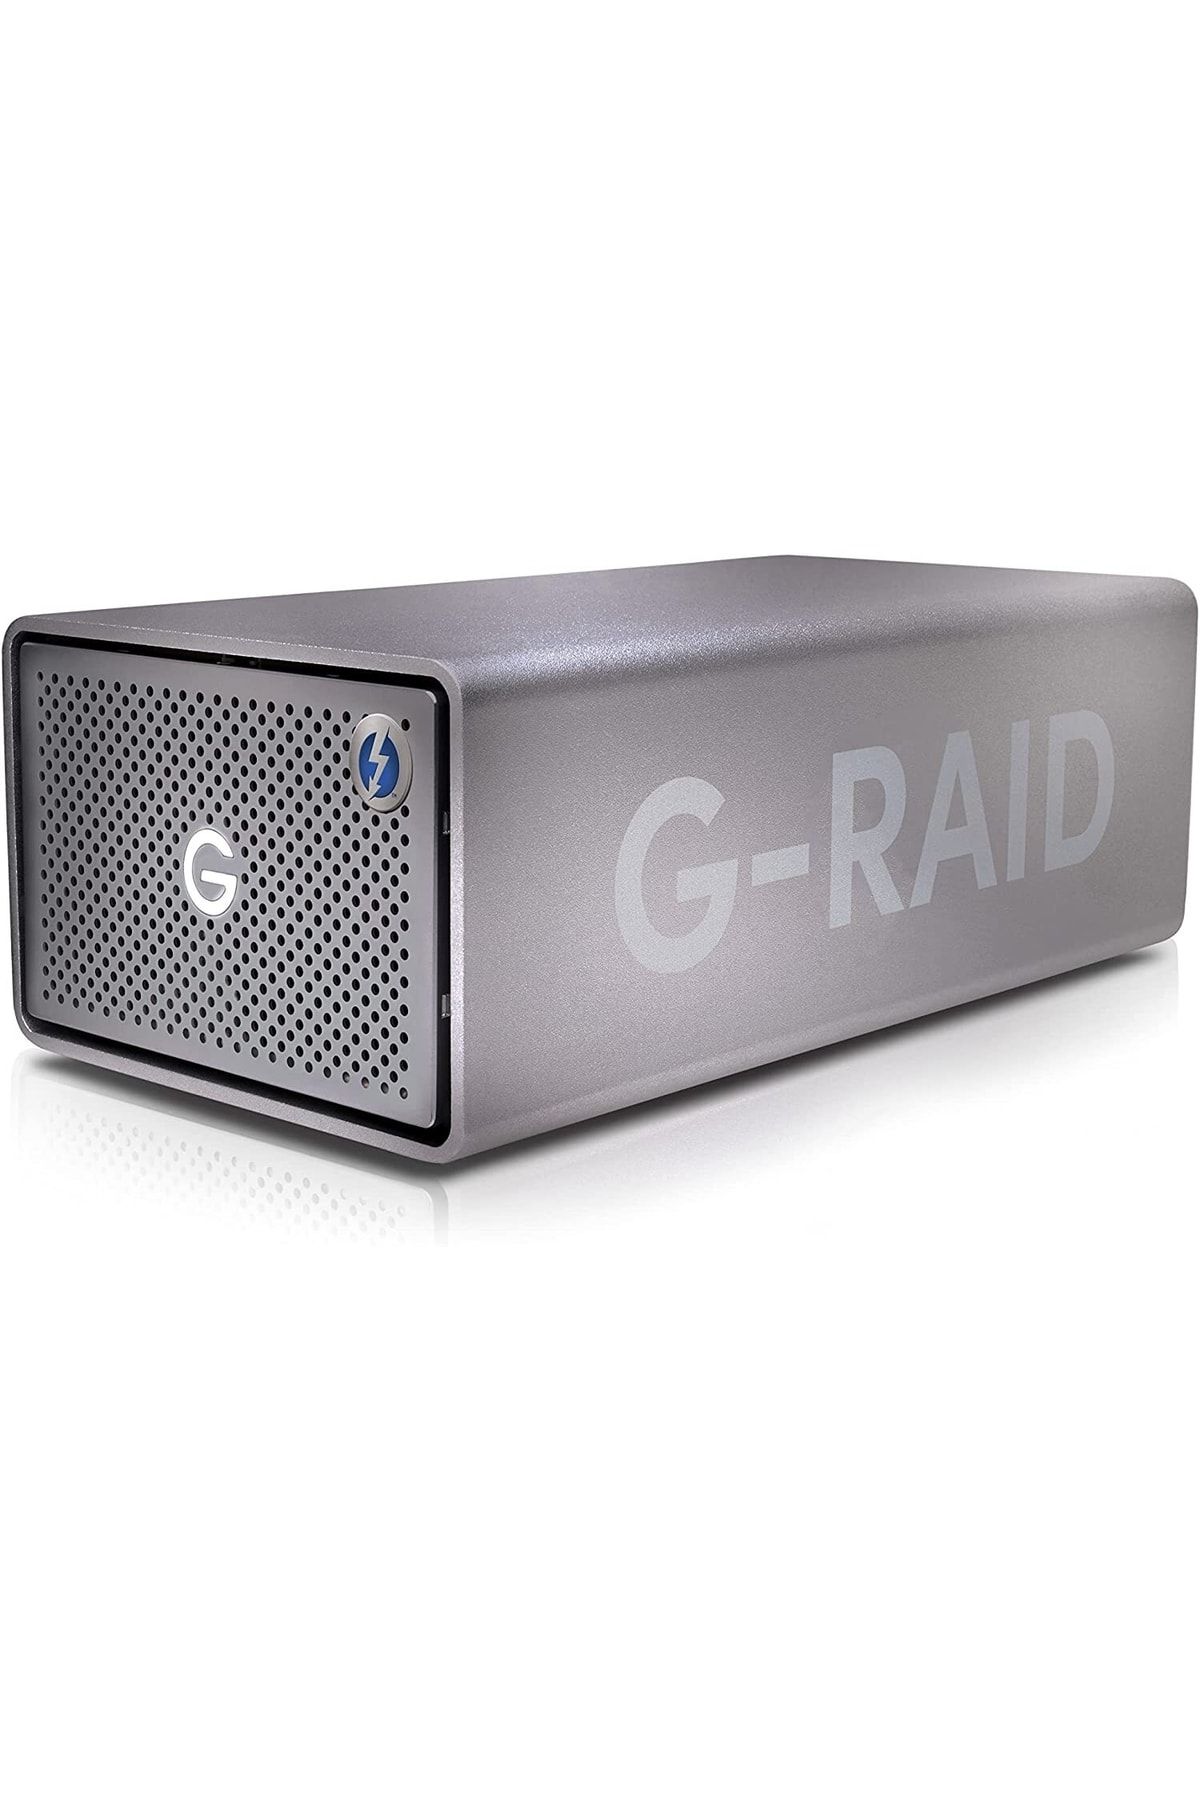 Sandisk Pro G-raid 2 24 Tb Disk Sdph62h-024t-mbaad Taşınabilir Harddisk